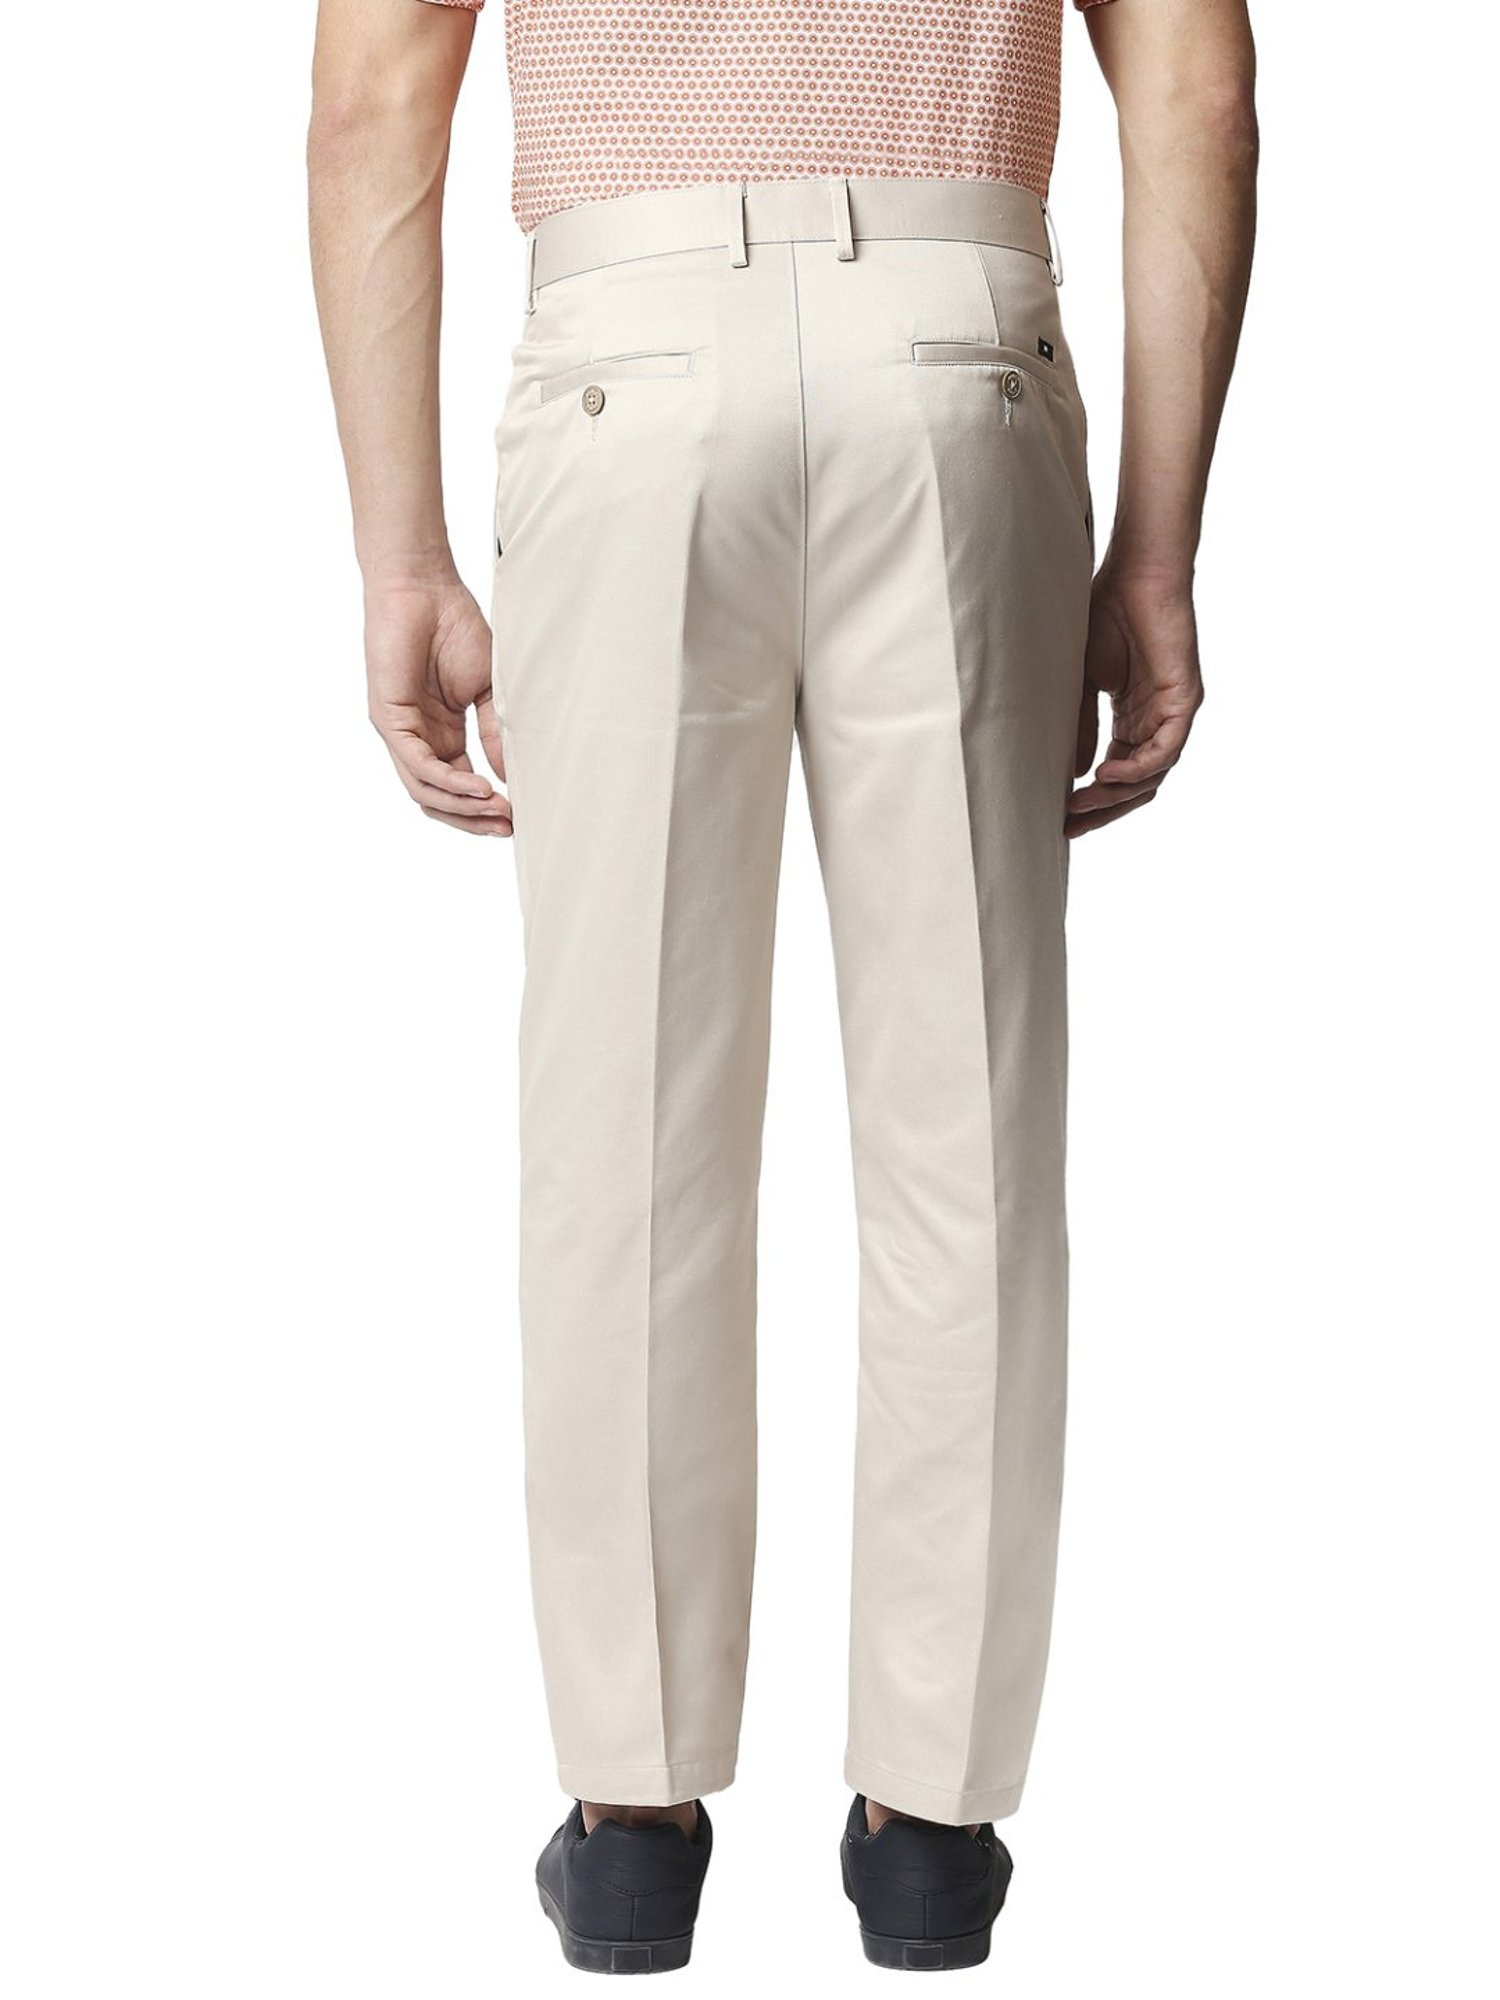 Buy Basics Khaki Comfort Fit Trousers for Mens Online  Tata CLiQ